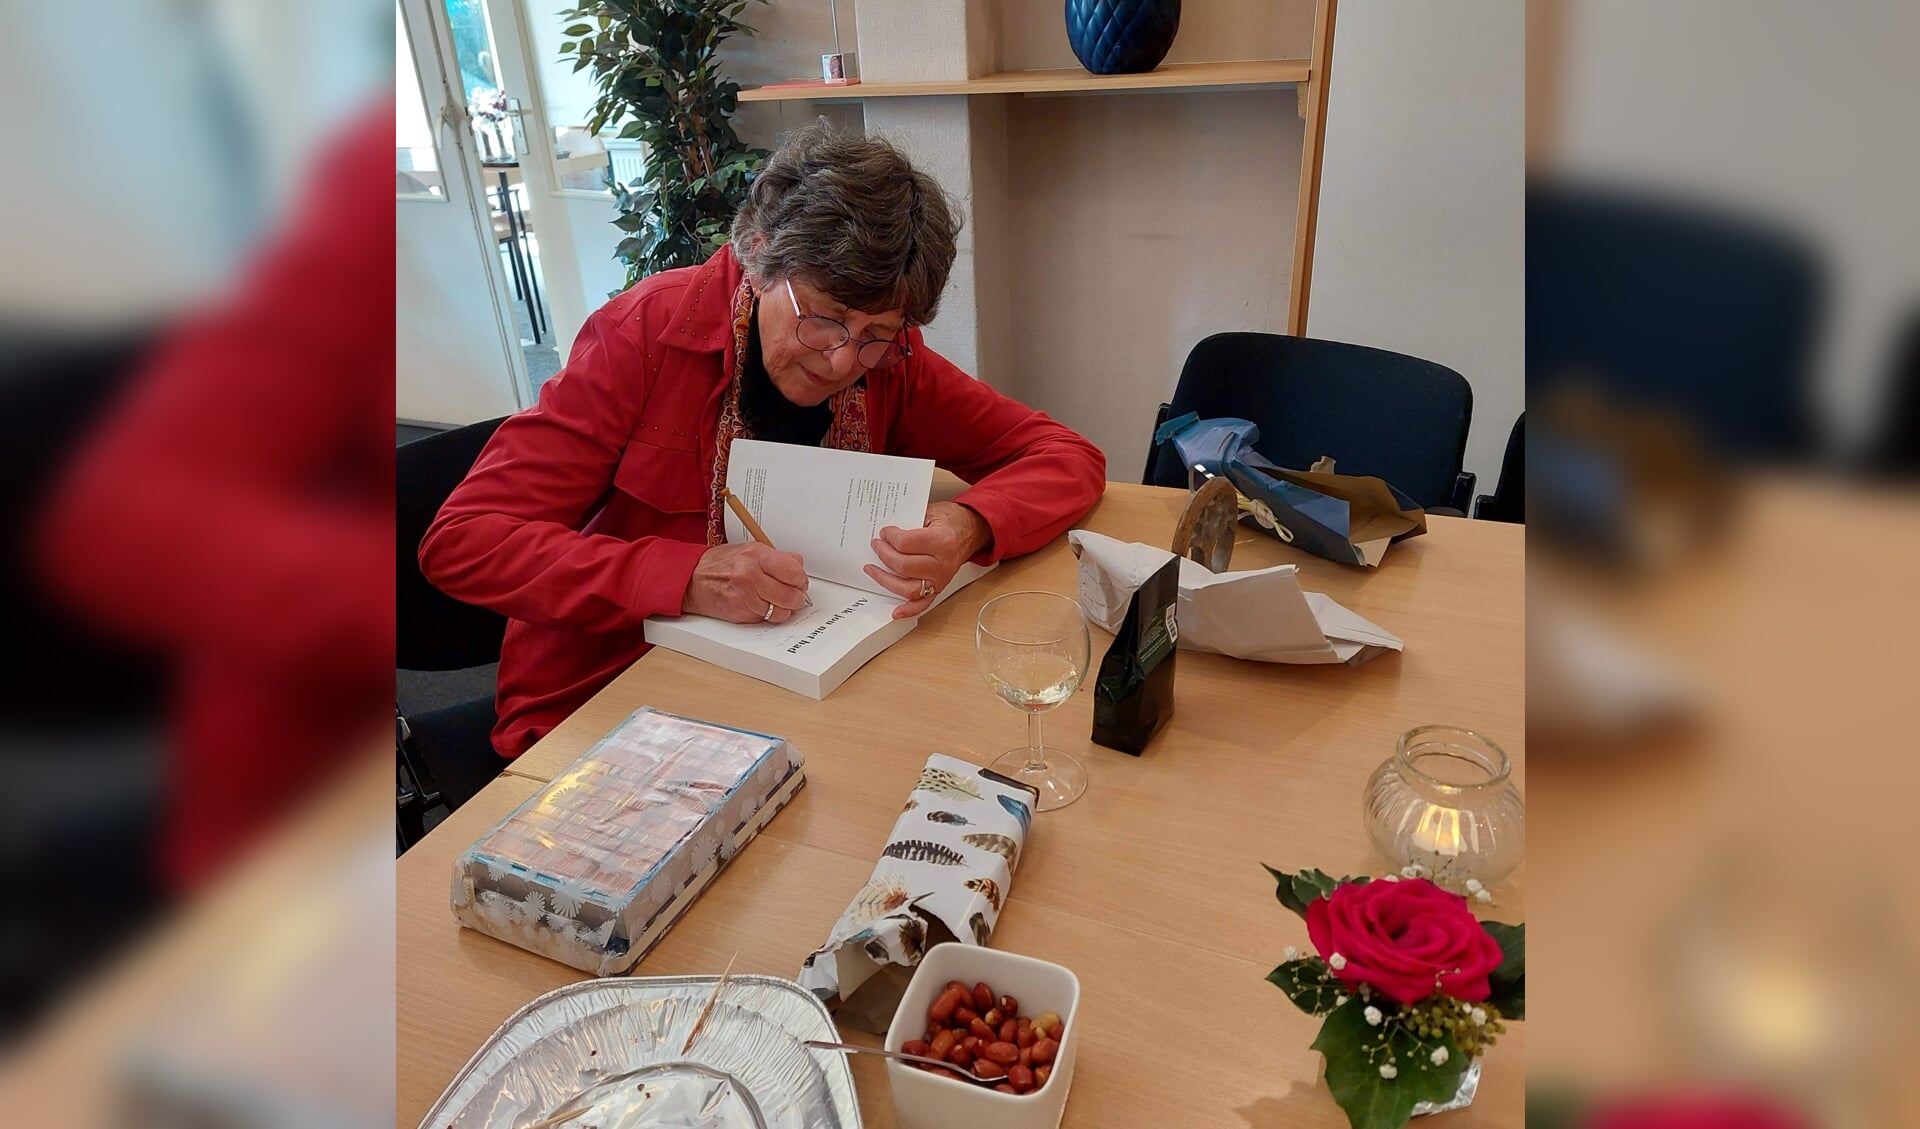 Mieke signeert haar boek